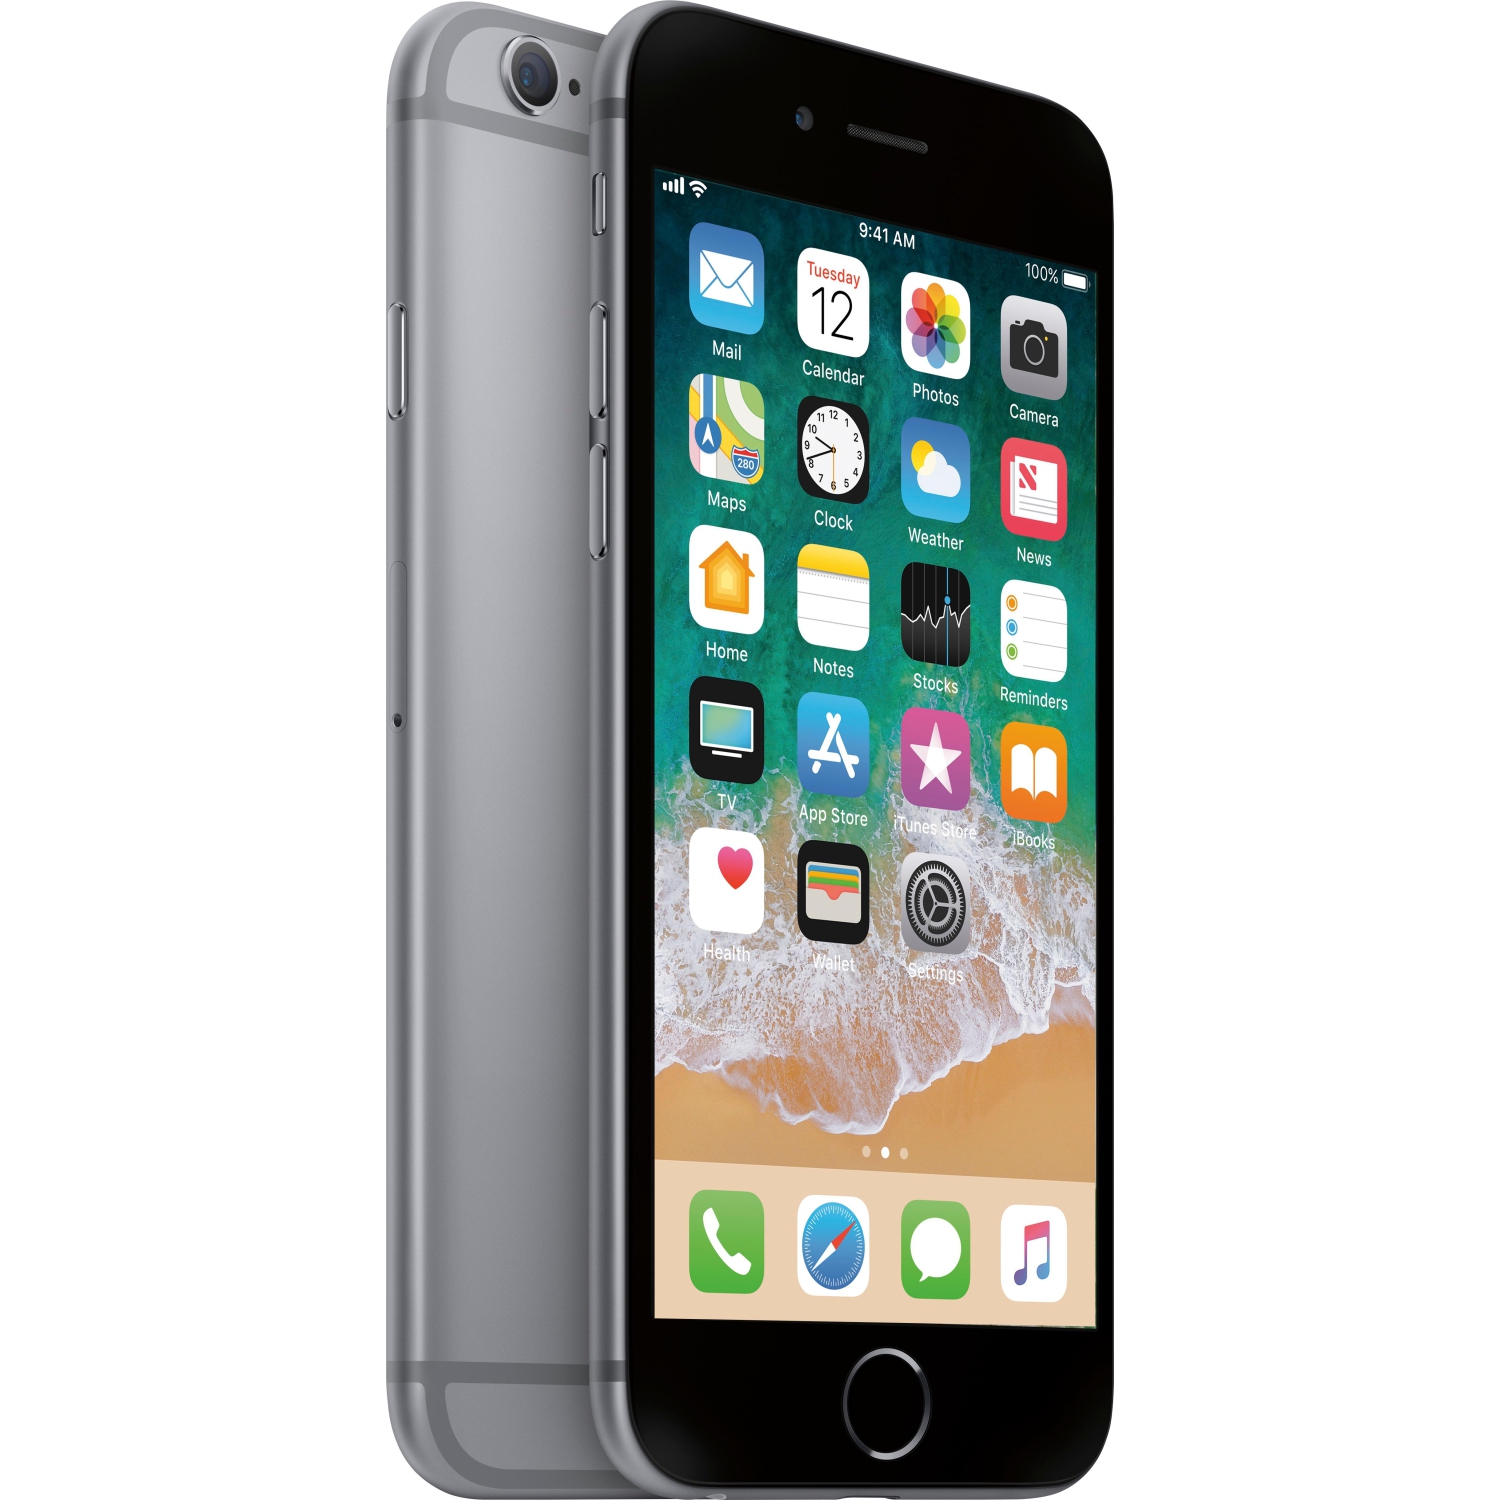 Refurbished (Good) - Apple iPhone 6s 32GB Smartphone - Space Gray - Unlocked